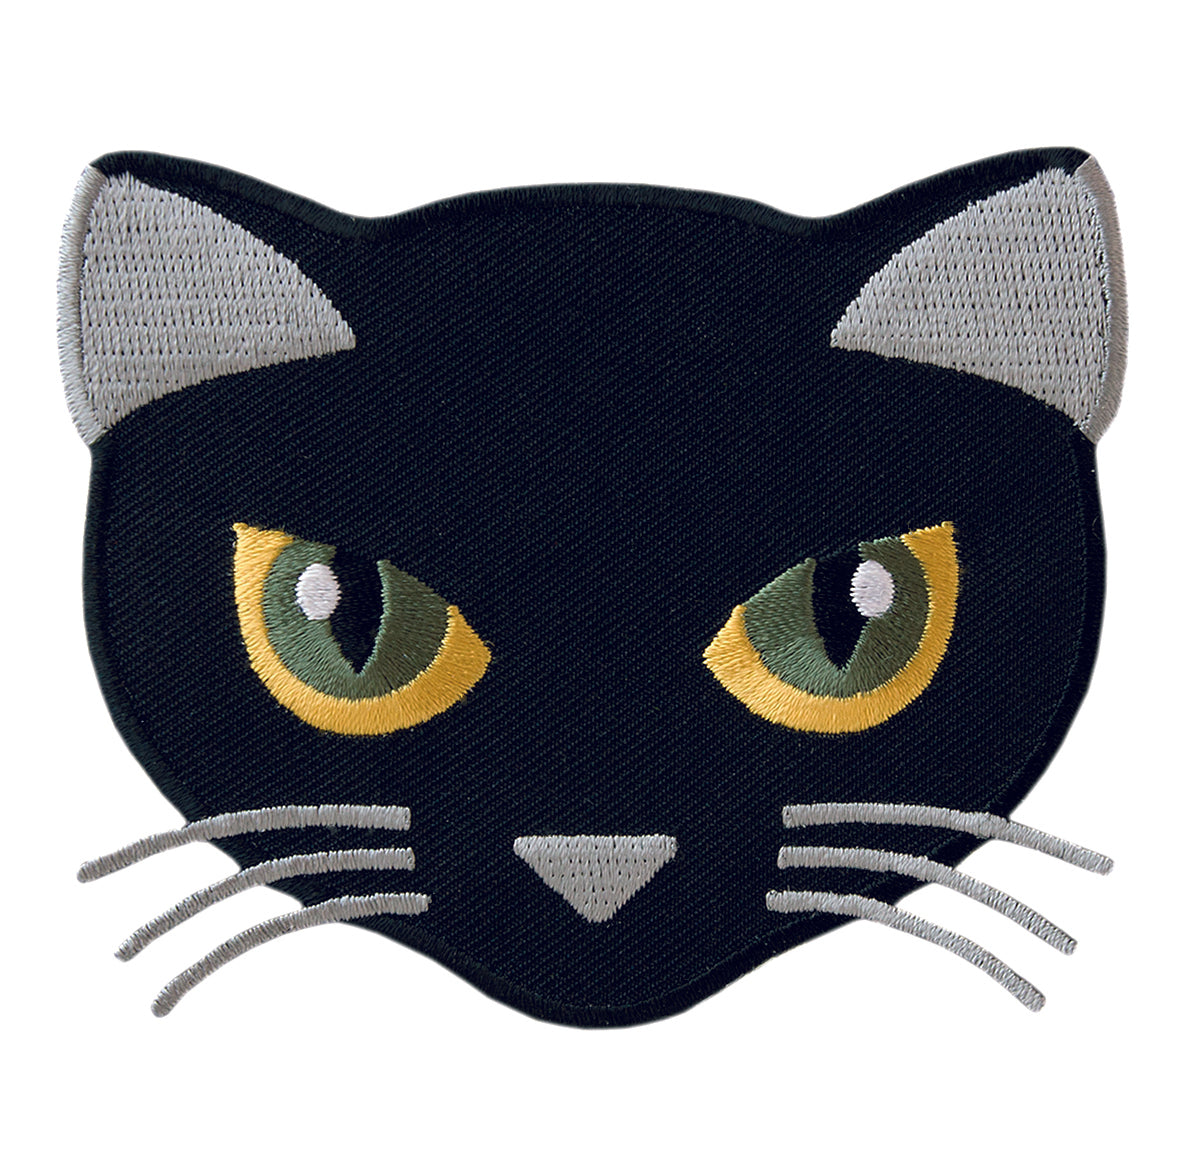 Applikationen - Kids and Hits - aufbügelbar Katzenkopf schwarz